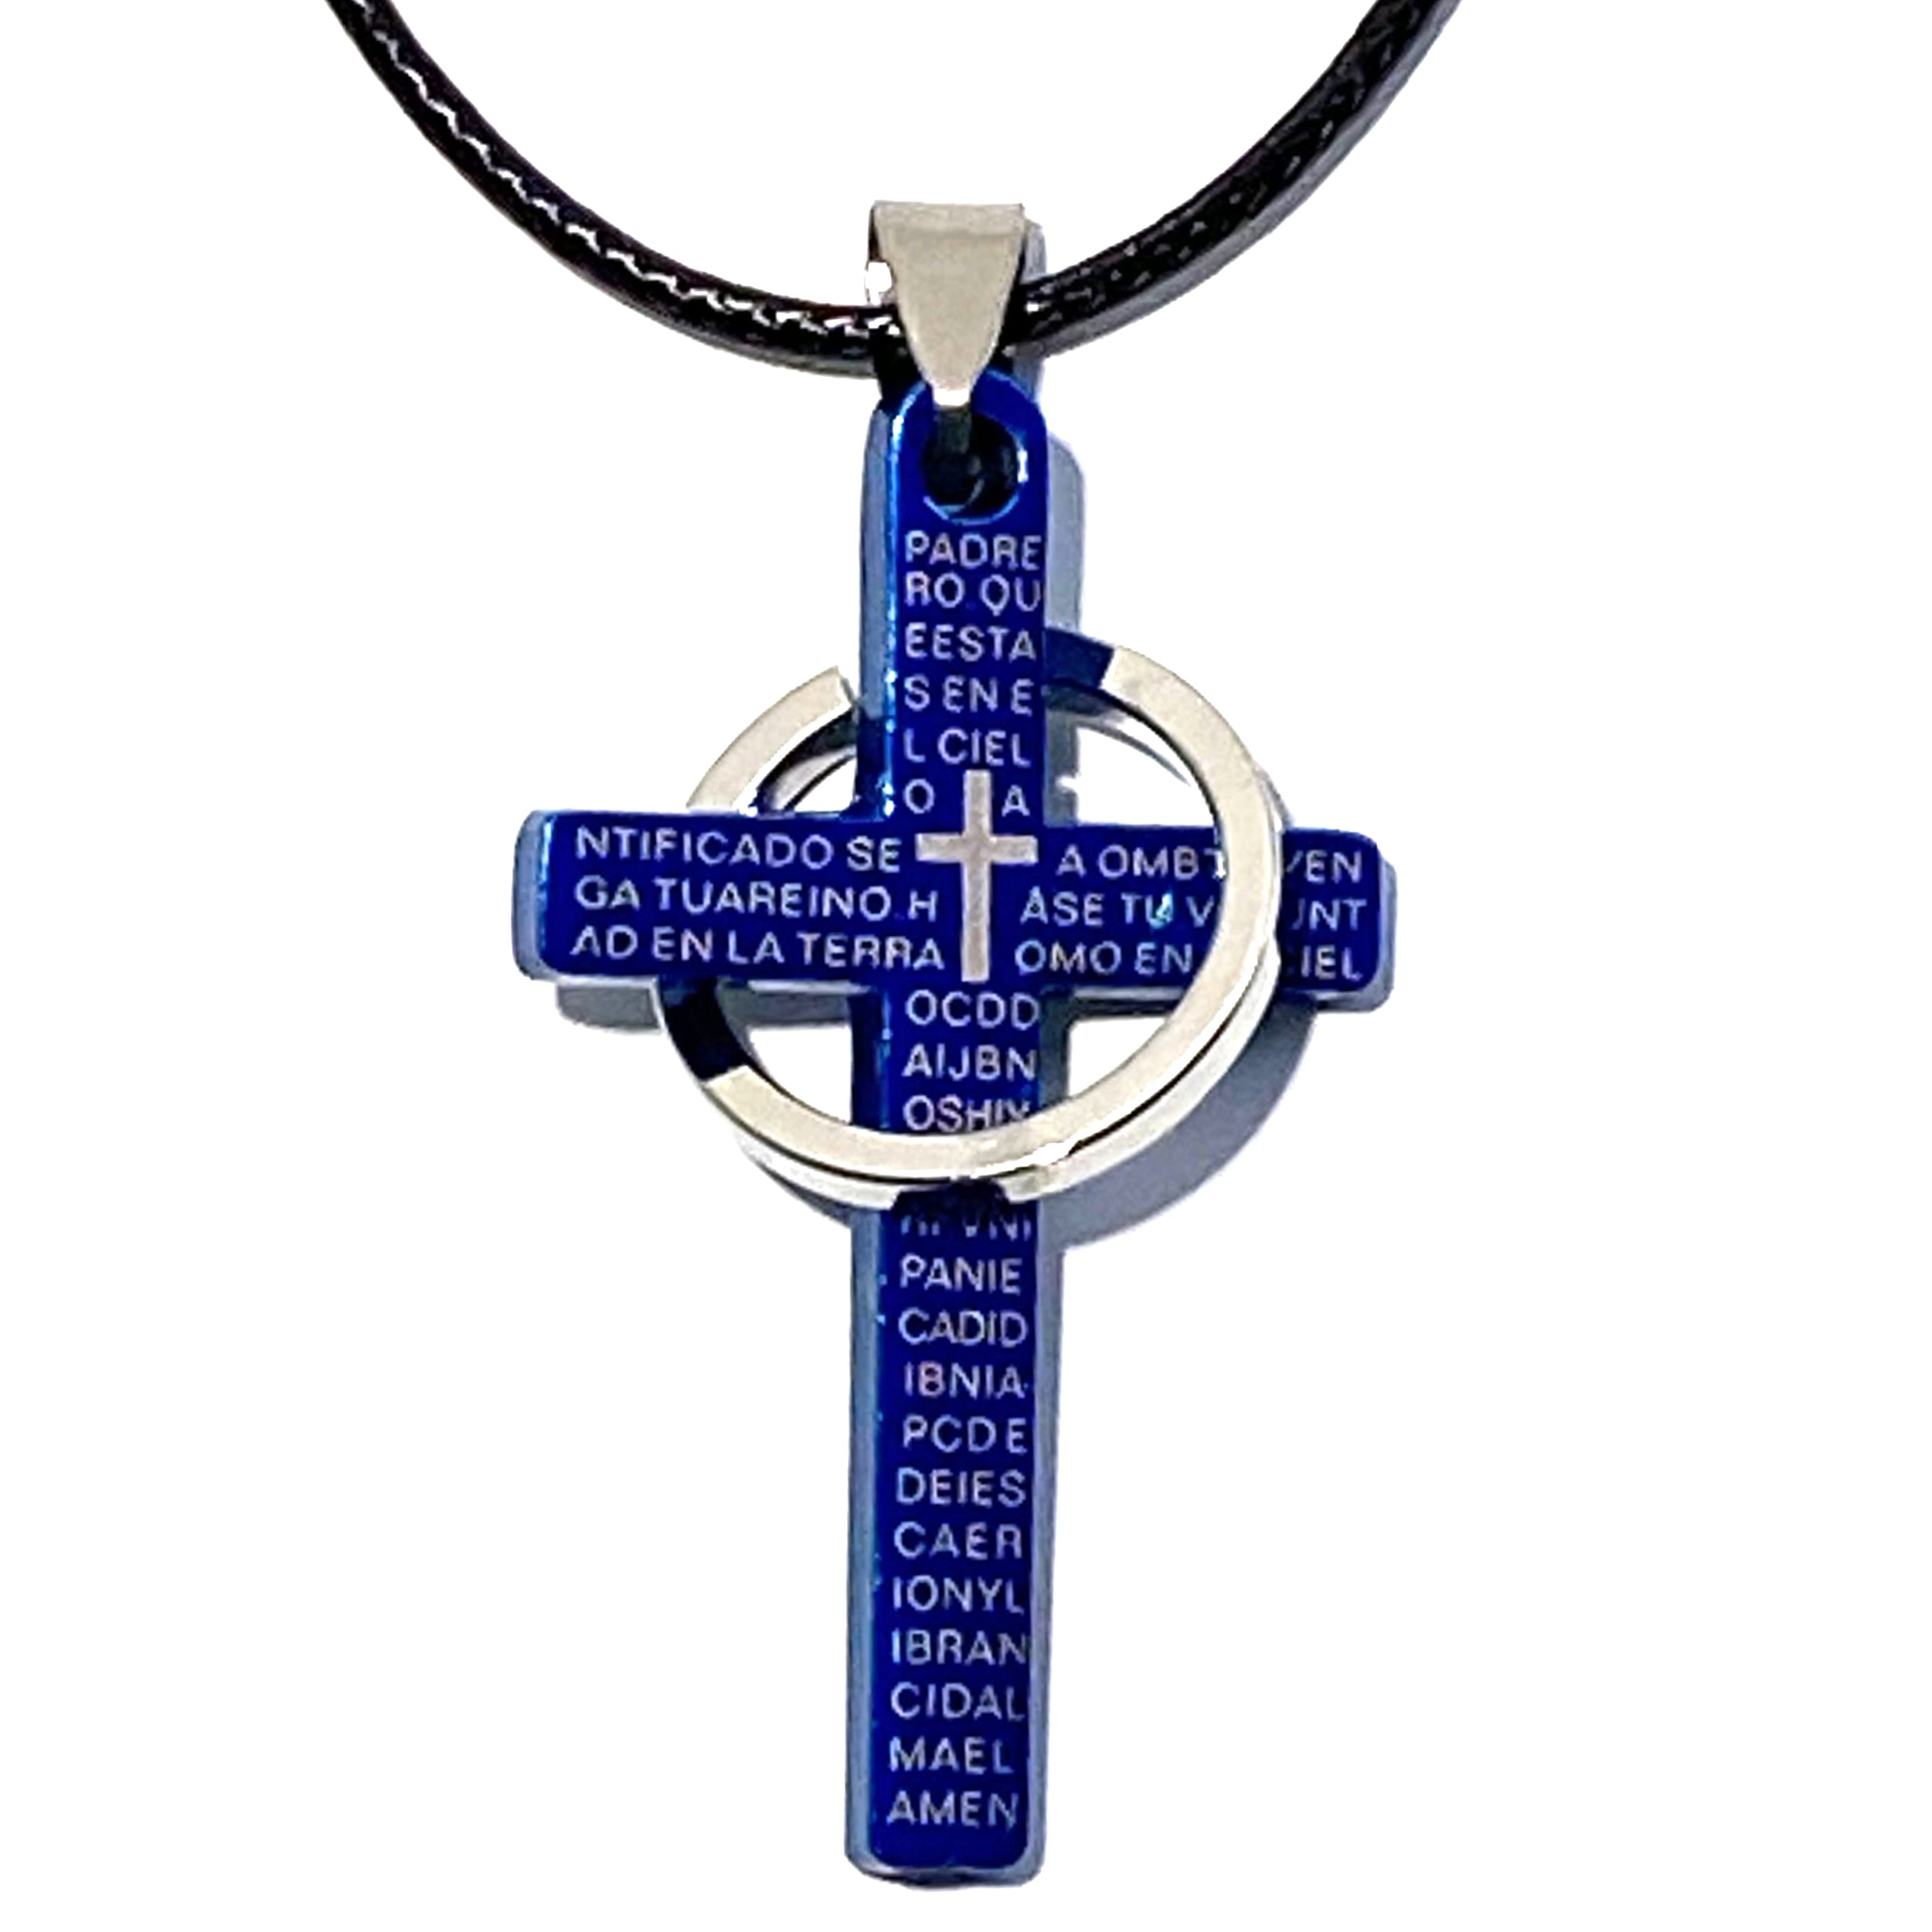 Men's New York Jewelry Stainless Steel Mini Cross Necklace | SCHEELS.com